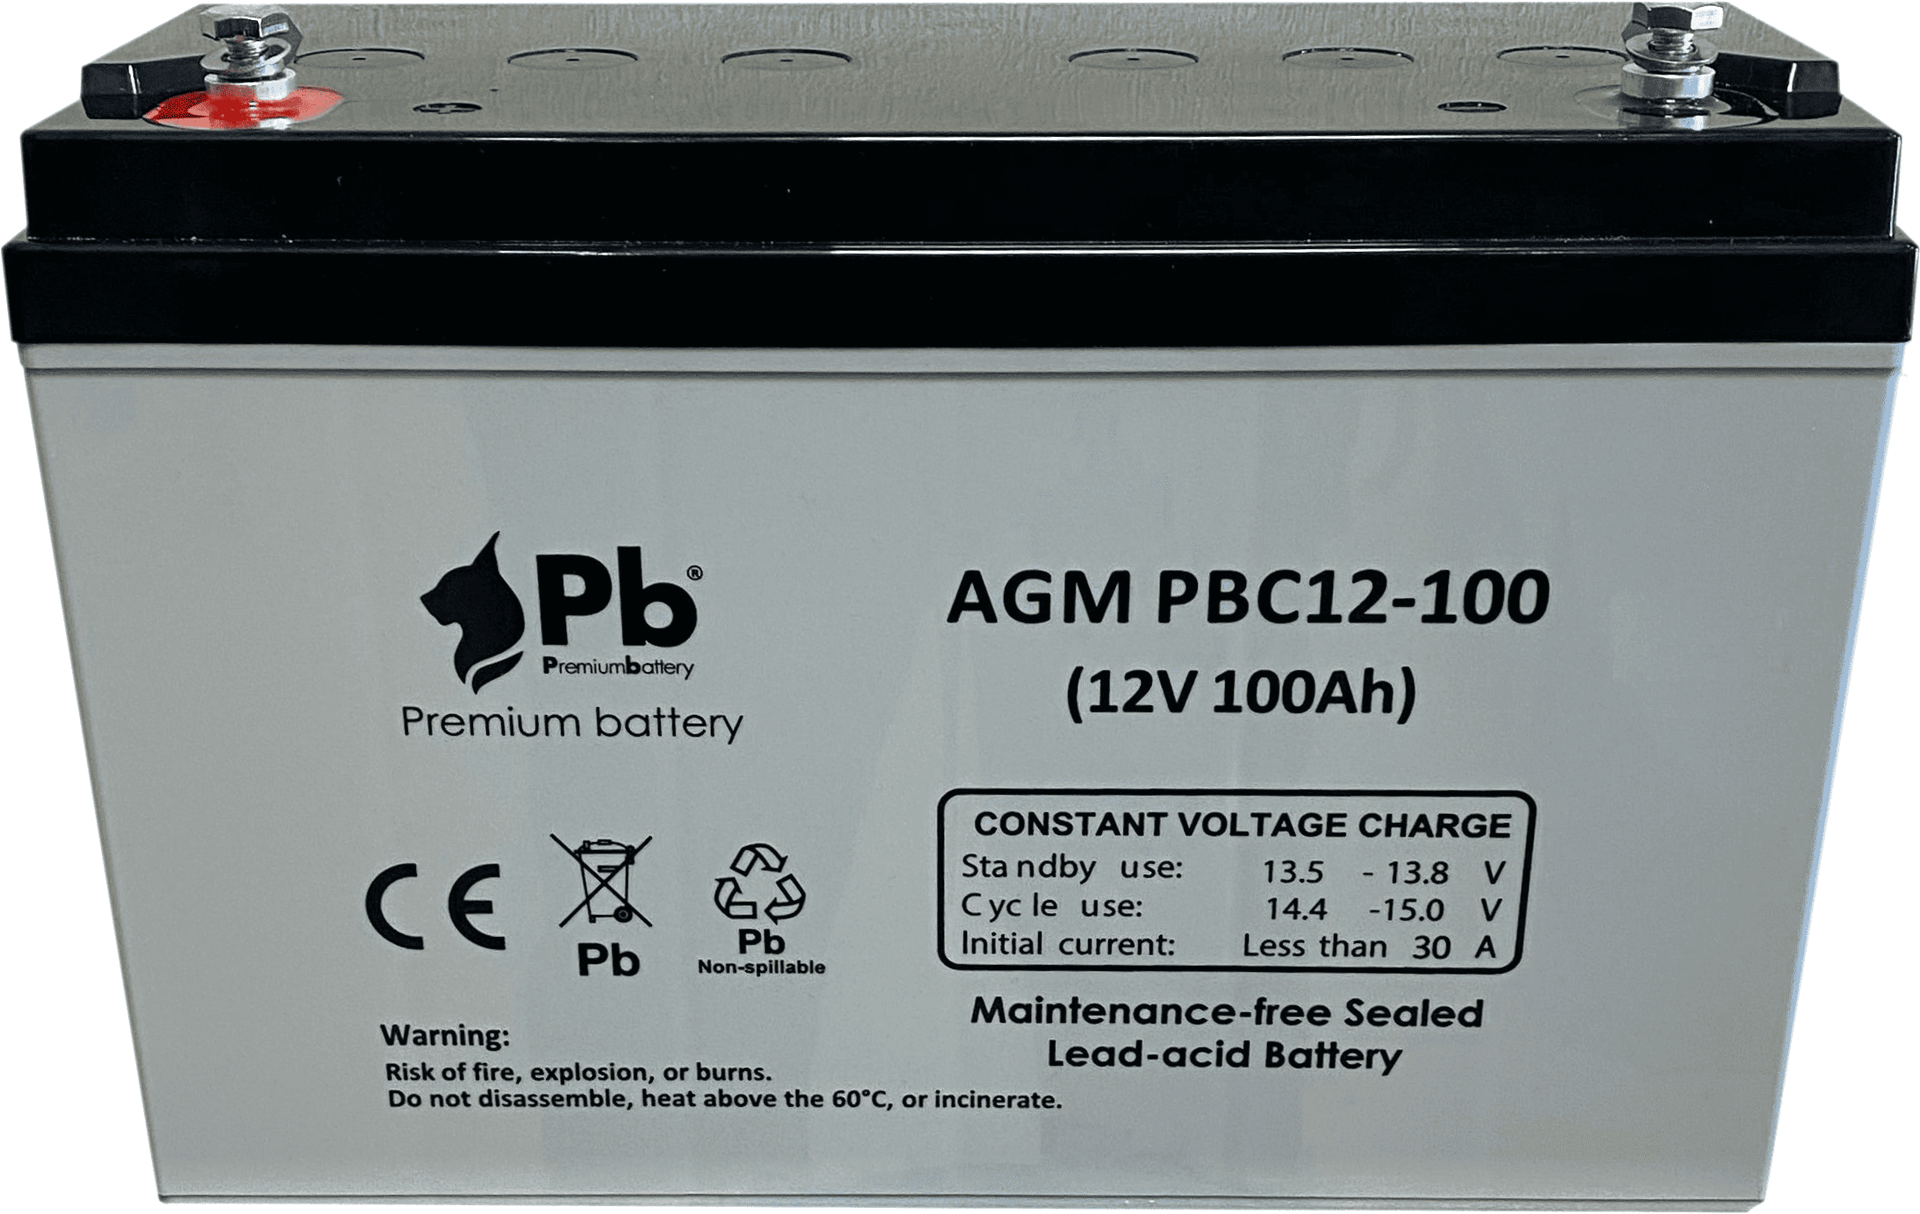 Imagen de Batería Premium Battery PBC12-100 AGM Ciclica